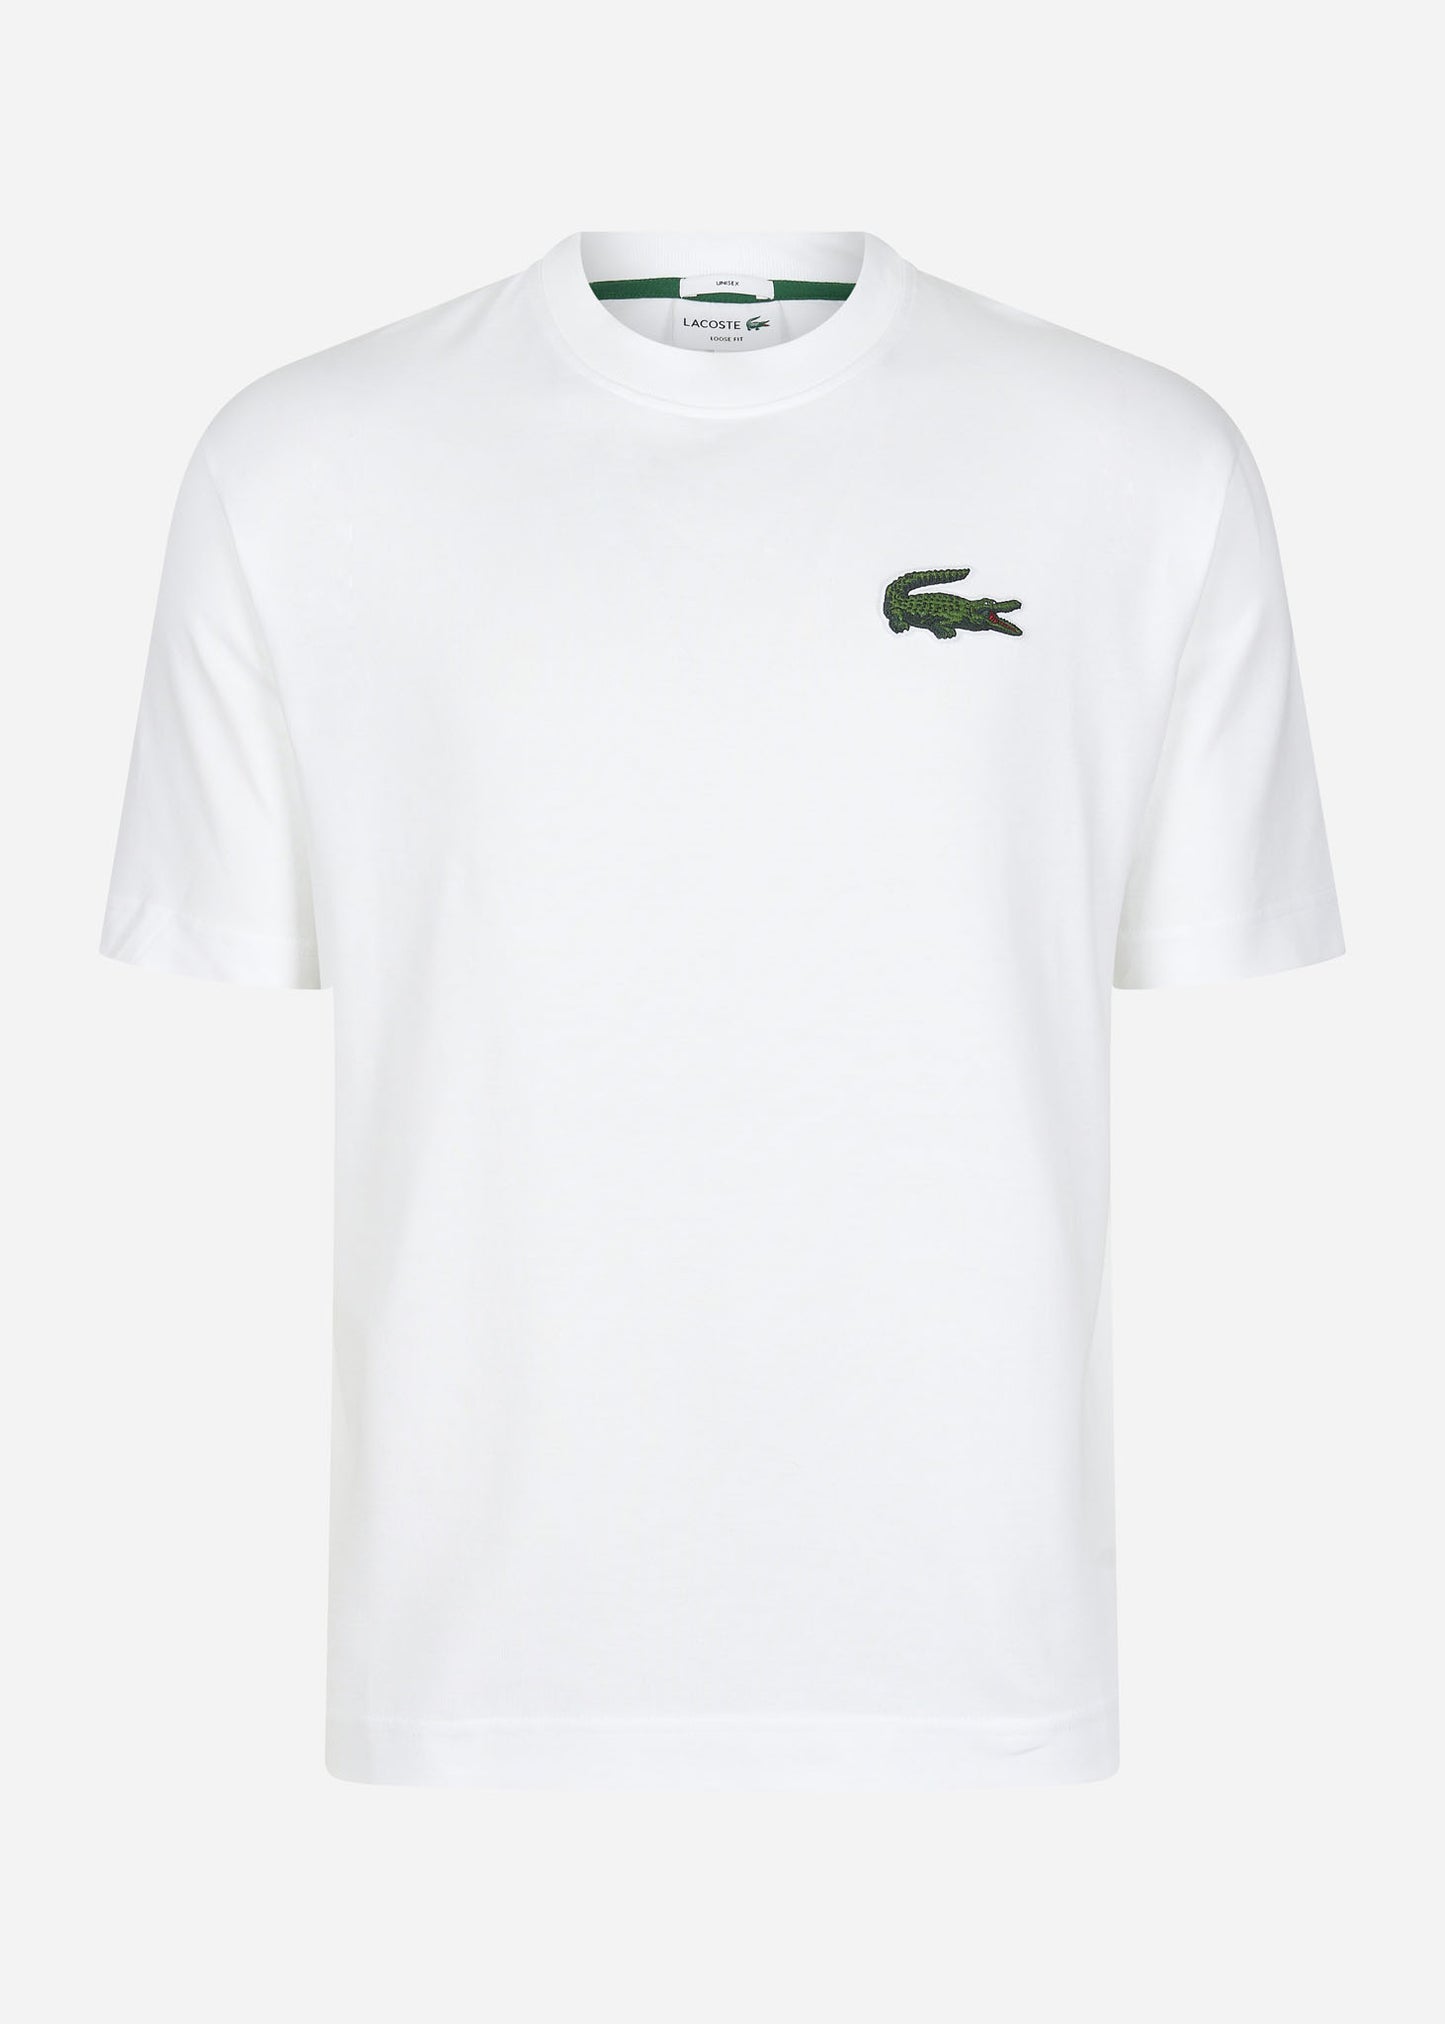 lacoste loose fit large logo t-shirt wit